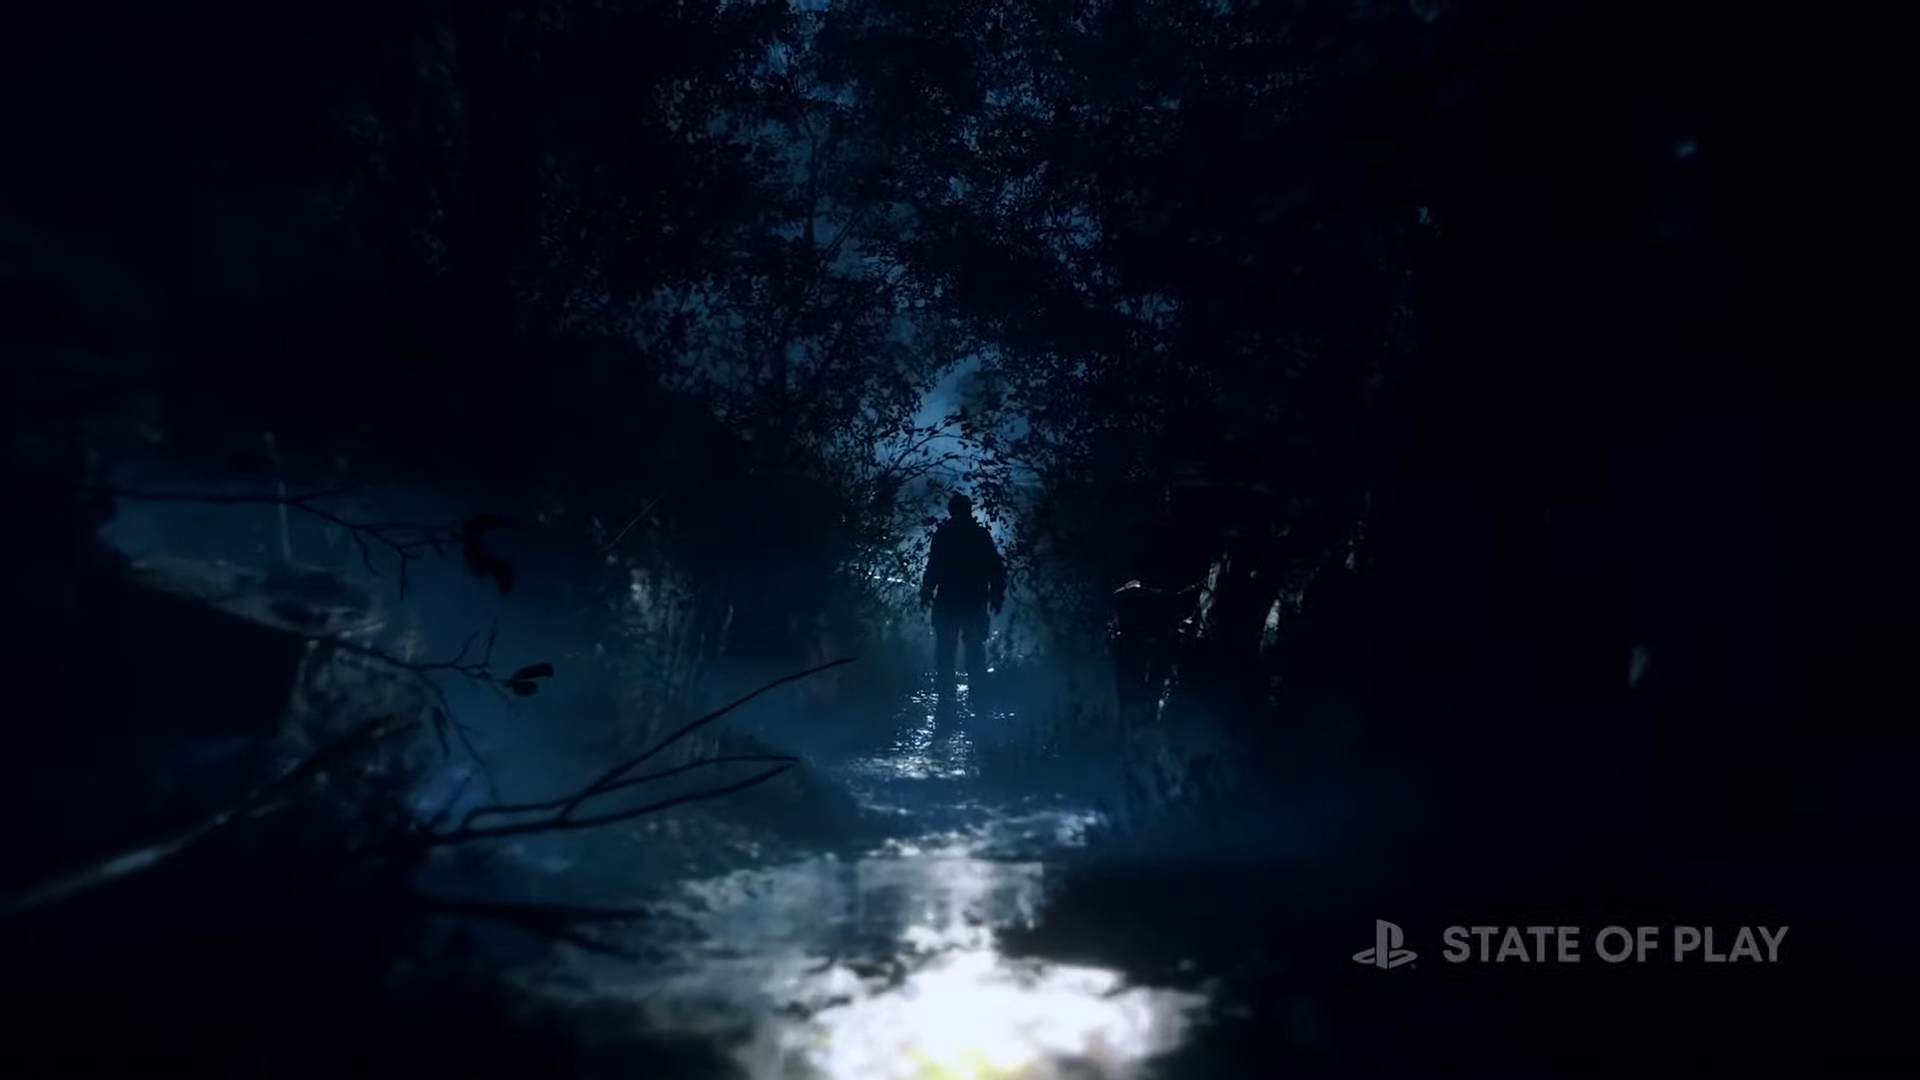 Resident Evil Village's Resident Evil 4 Connections Shown In Trailer